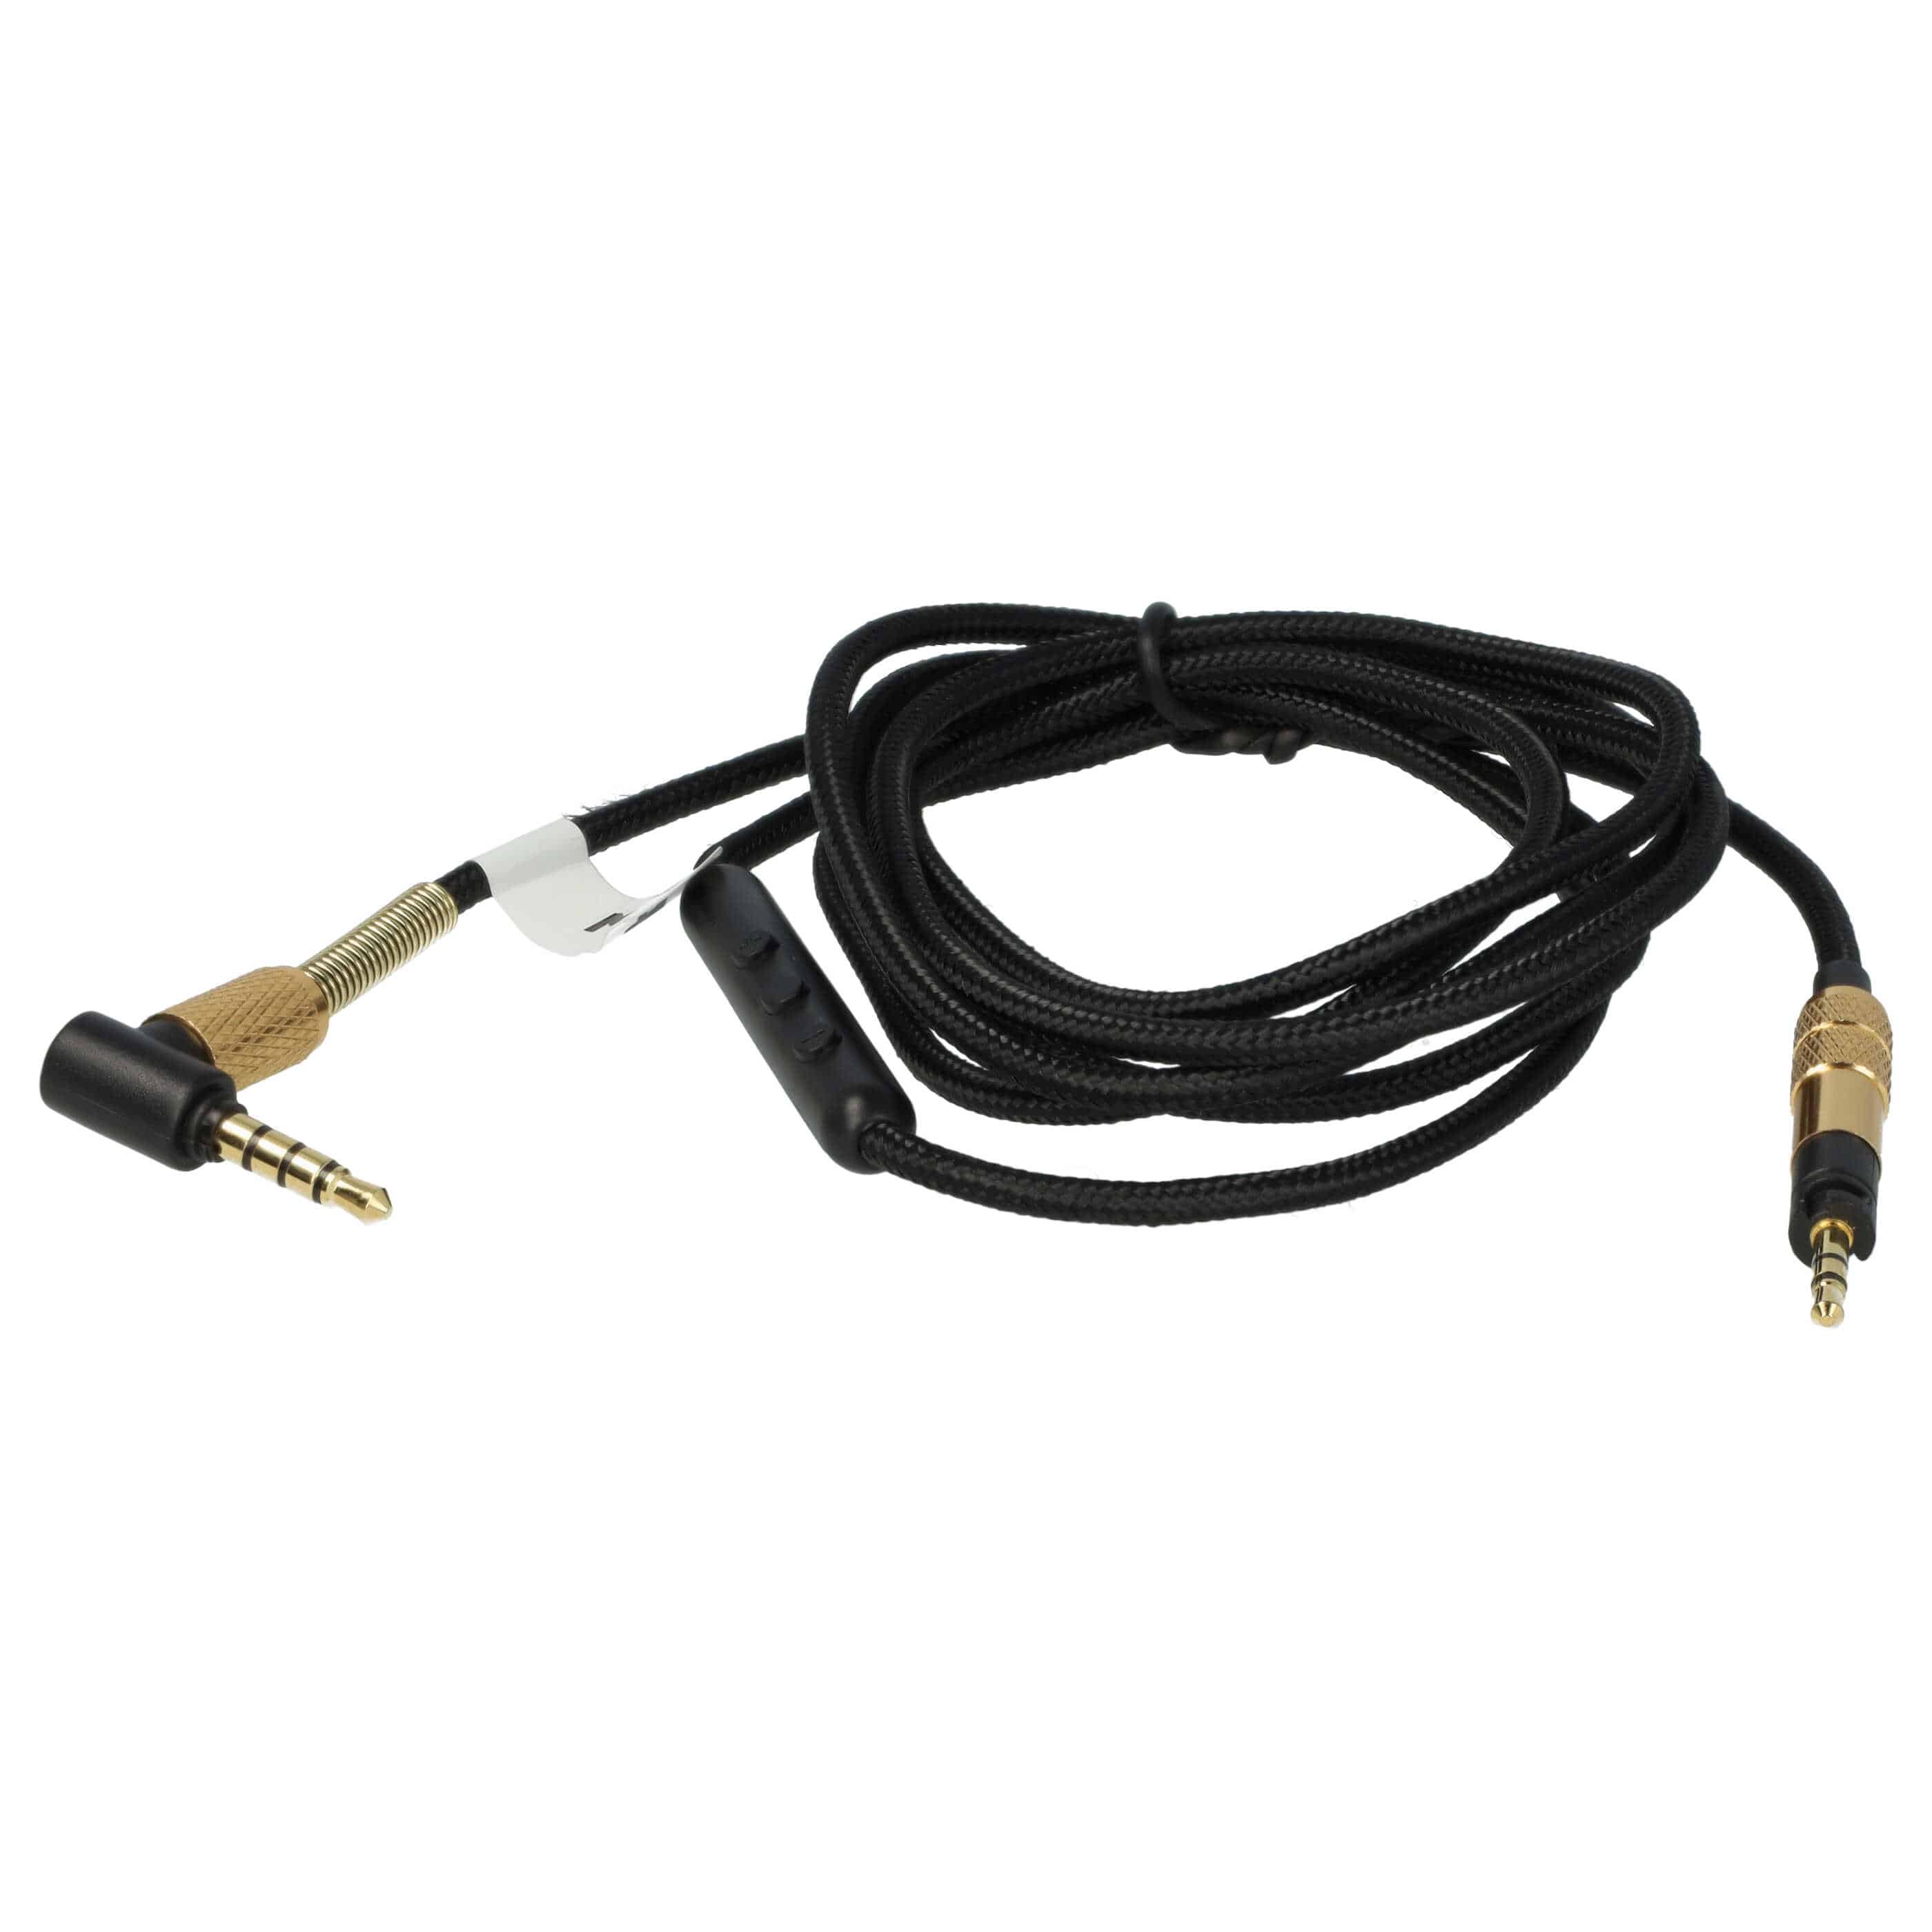 Cable audio AUX a conector jack de 3,5 mm para auriculares Sennheiser Momentum 2.0 HD4.30G